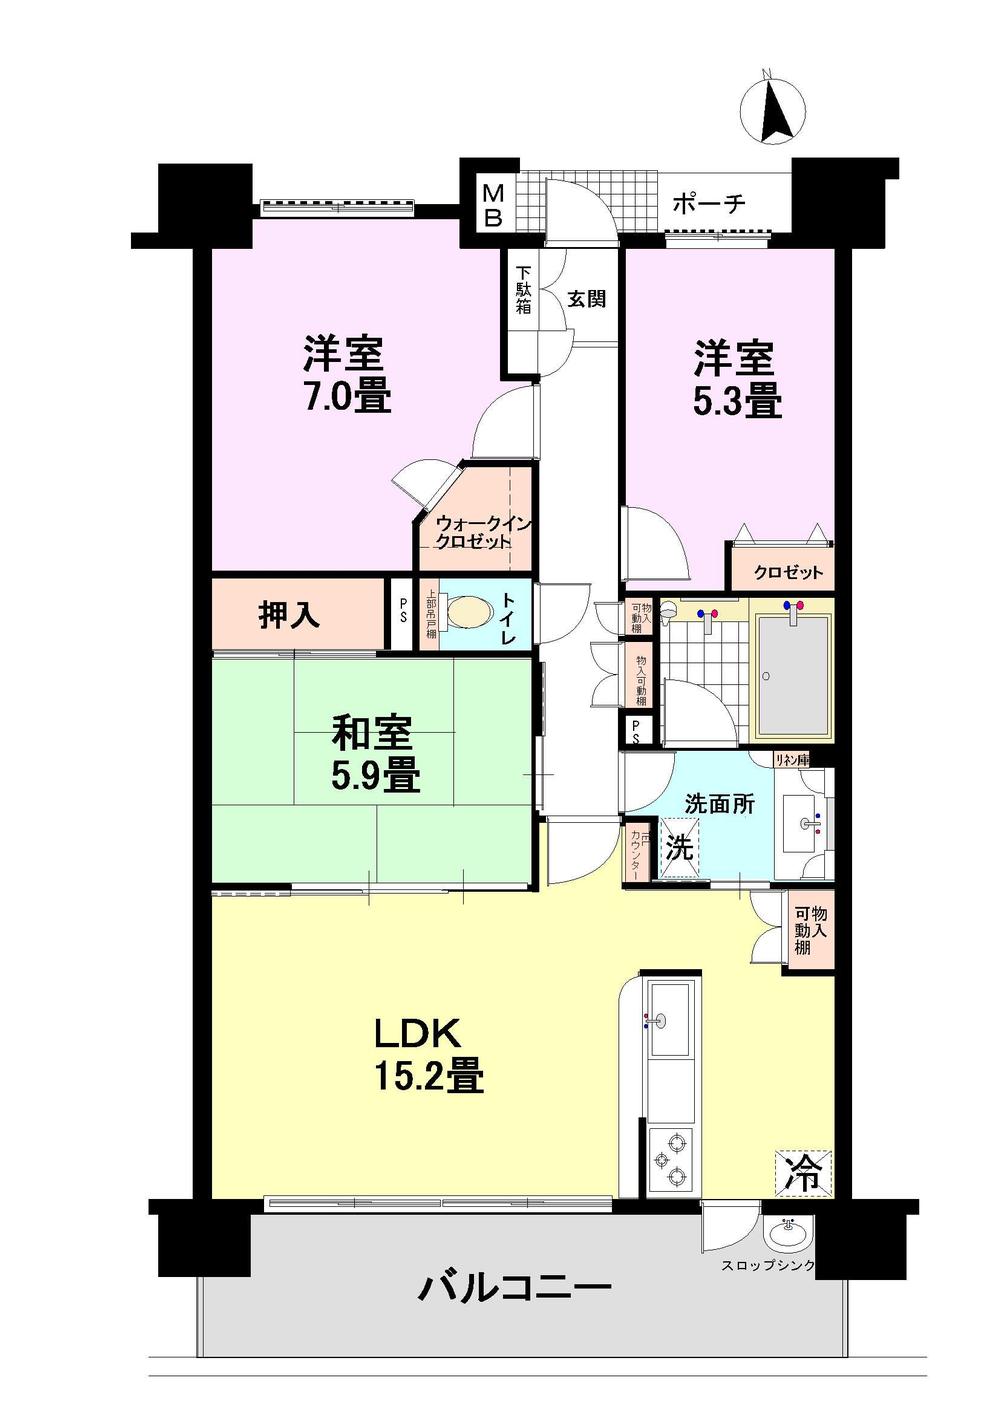 Floor plan. 3LDK, Price 23.5 million yen, Footprint 74.2 sq m , Balcony area 12.6 sq m